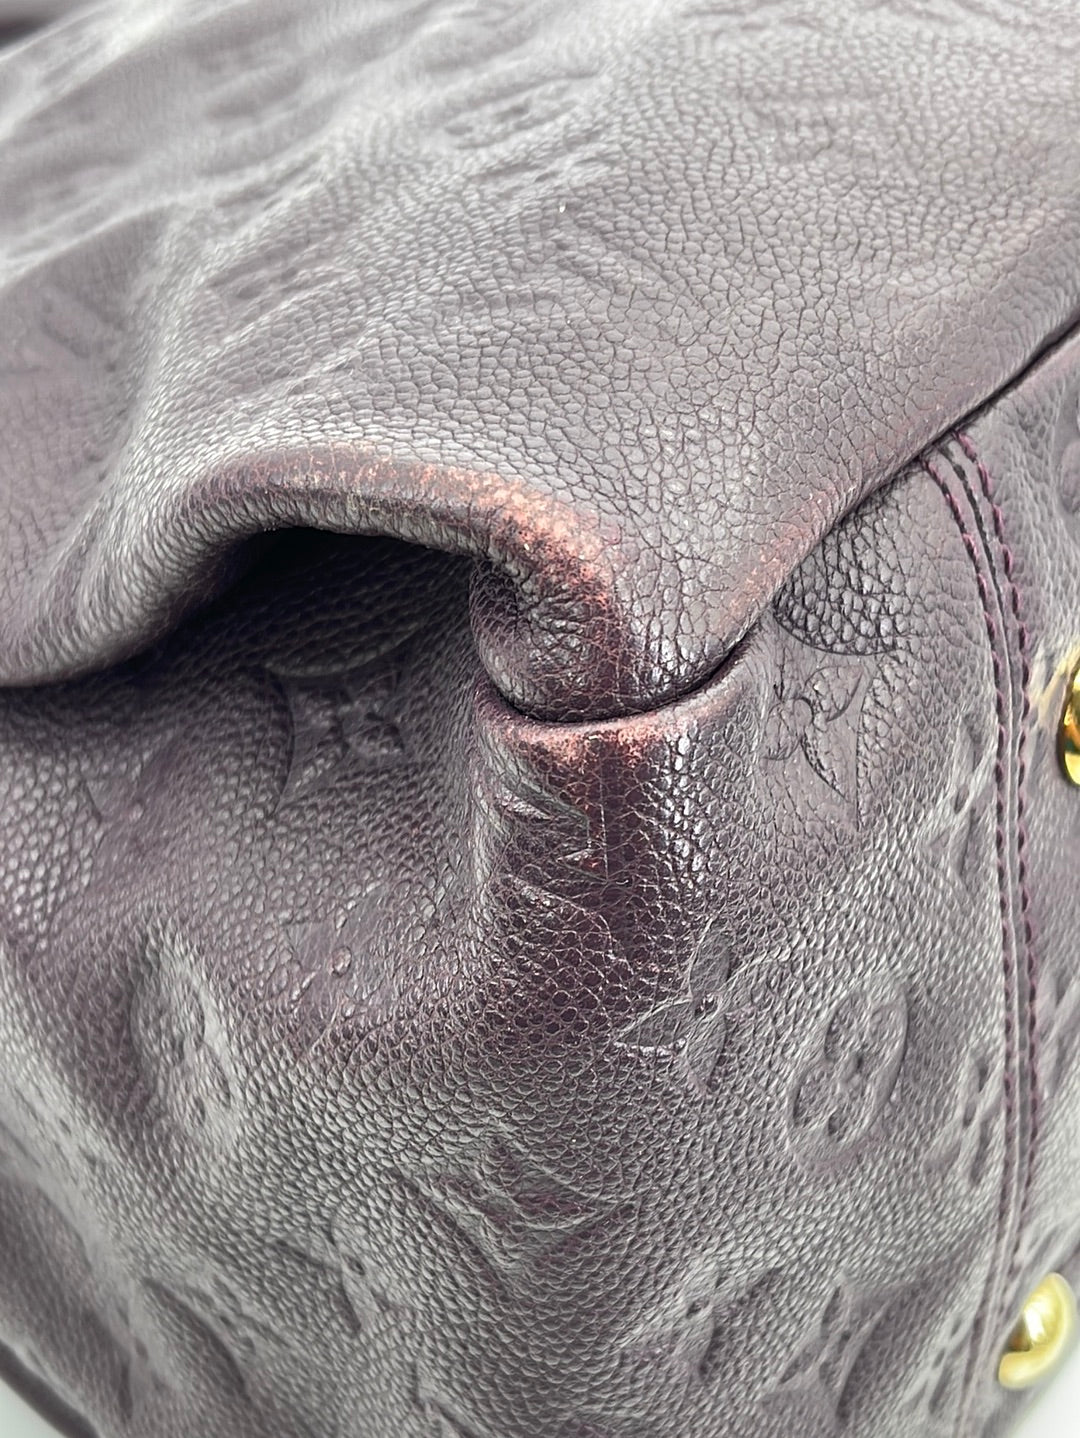 PRELOVED Louis Vuitton Artsy Purple Monogram Empreinte Leather MM Handbag CA1112 051823